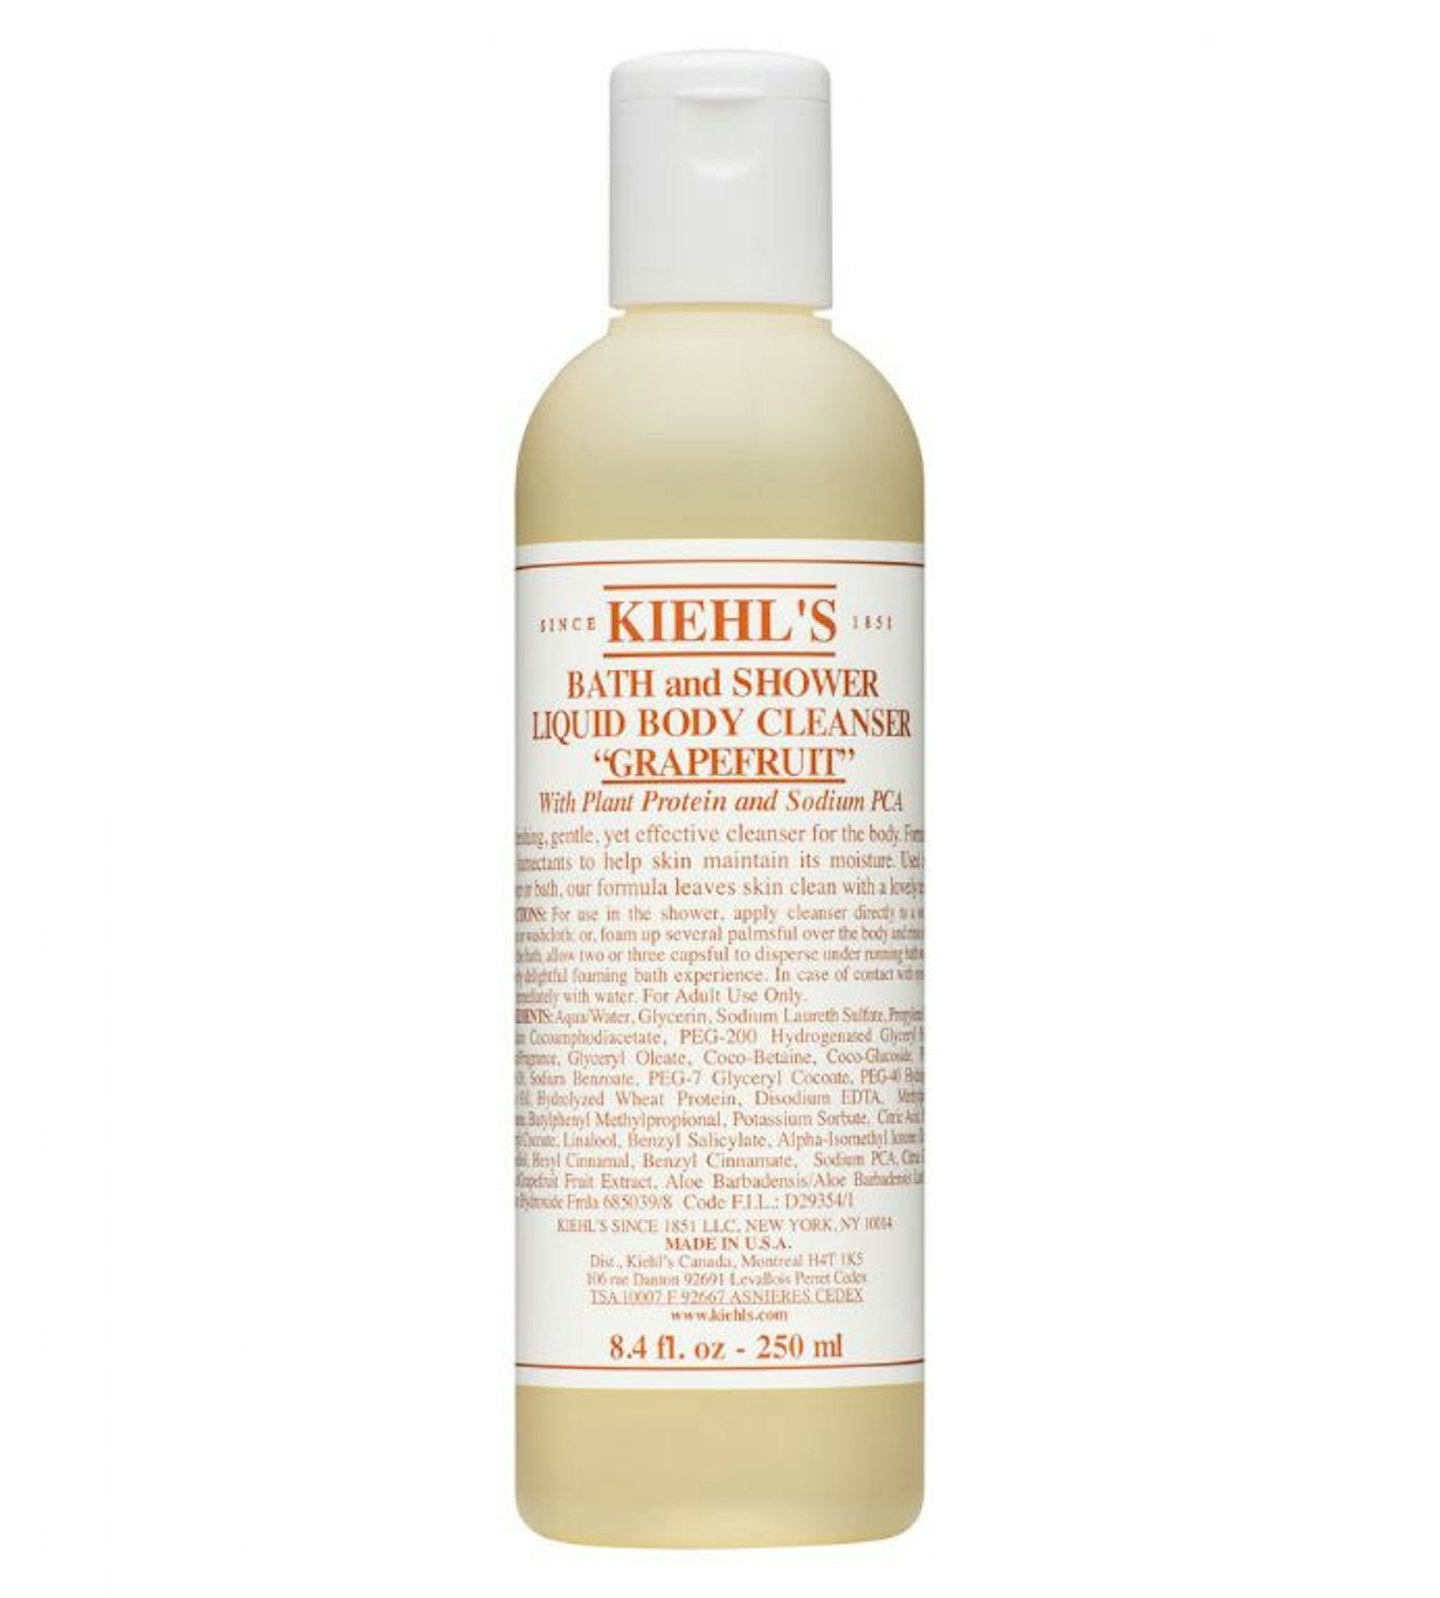 Kiehl's Bath And Shower Liquid Body Cleanser in Grapefruit